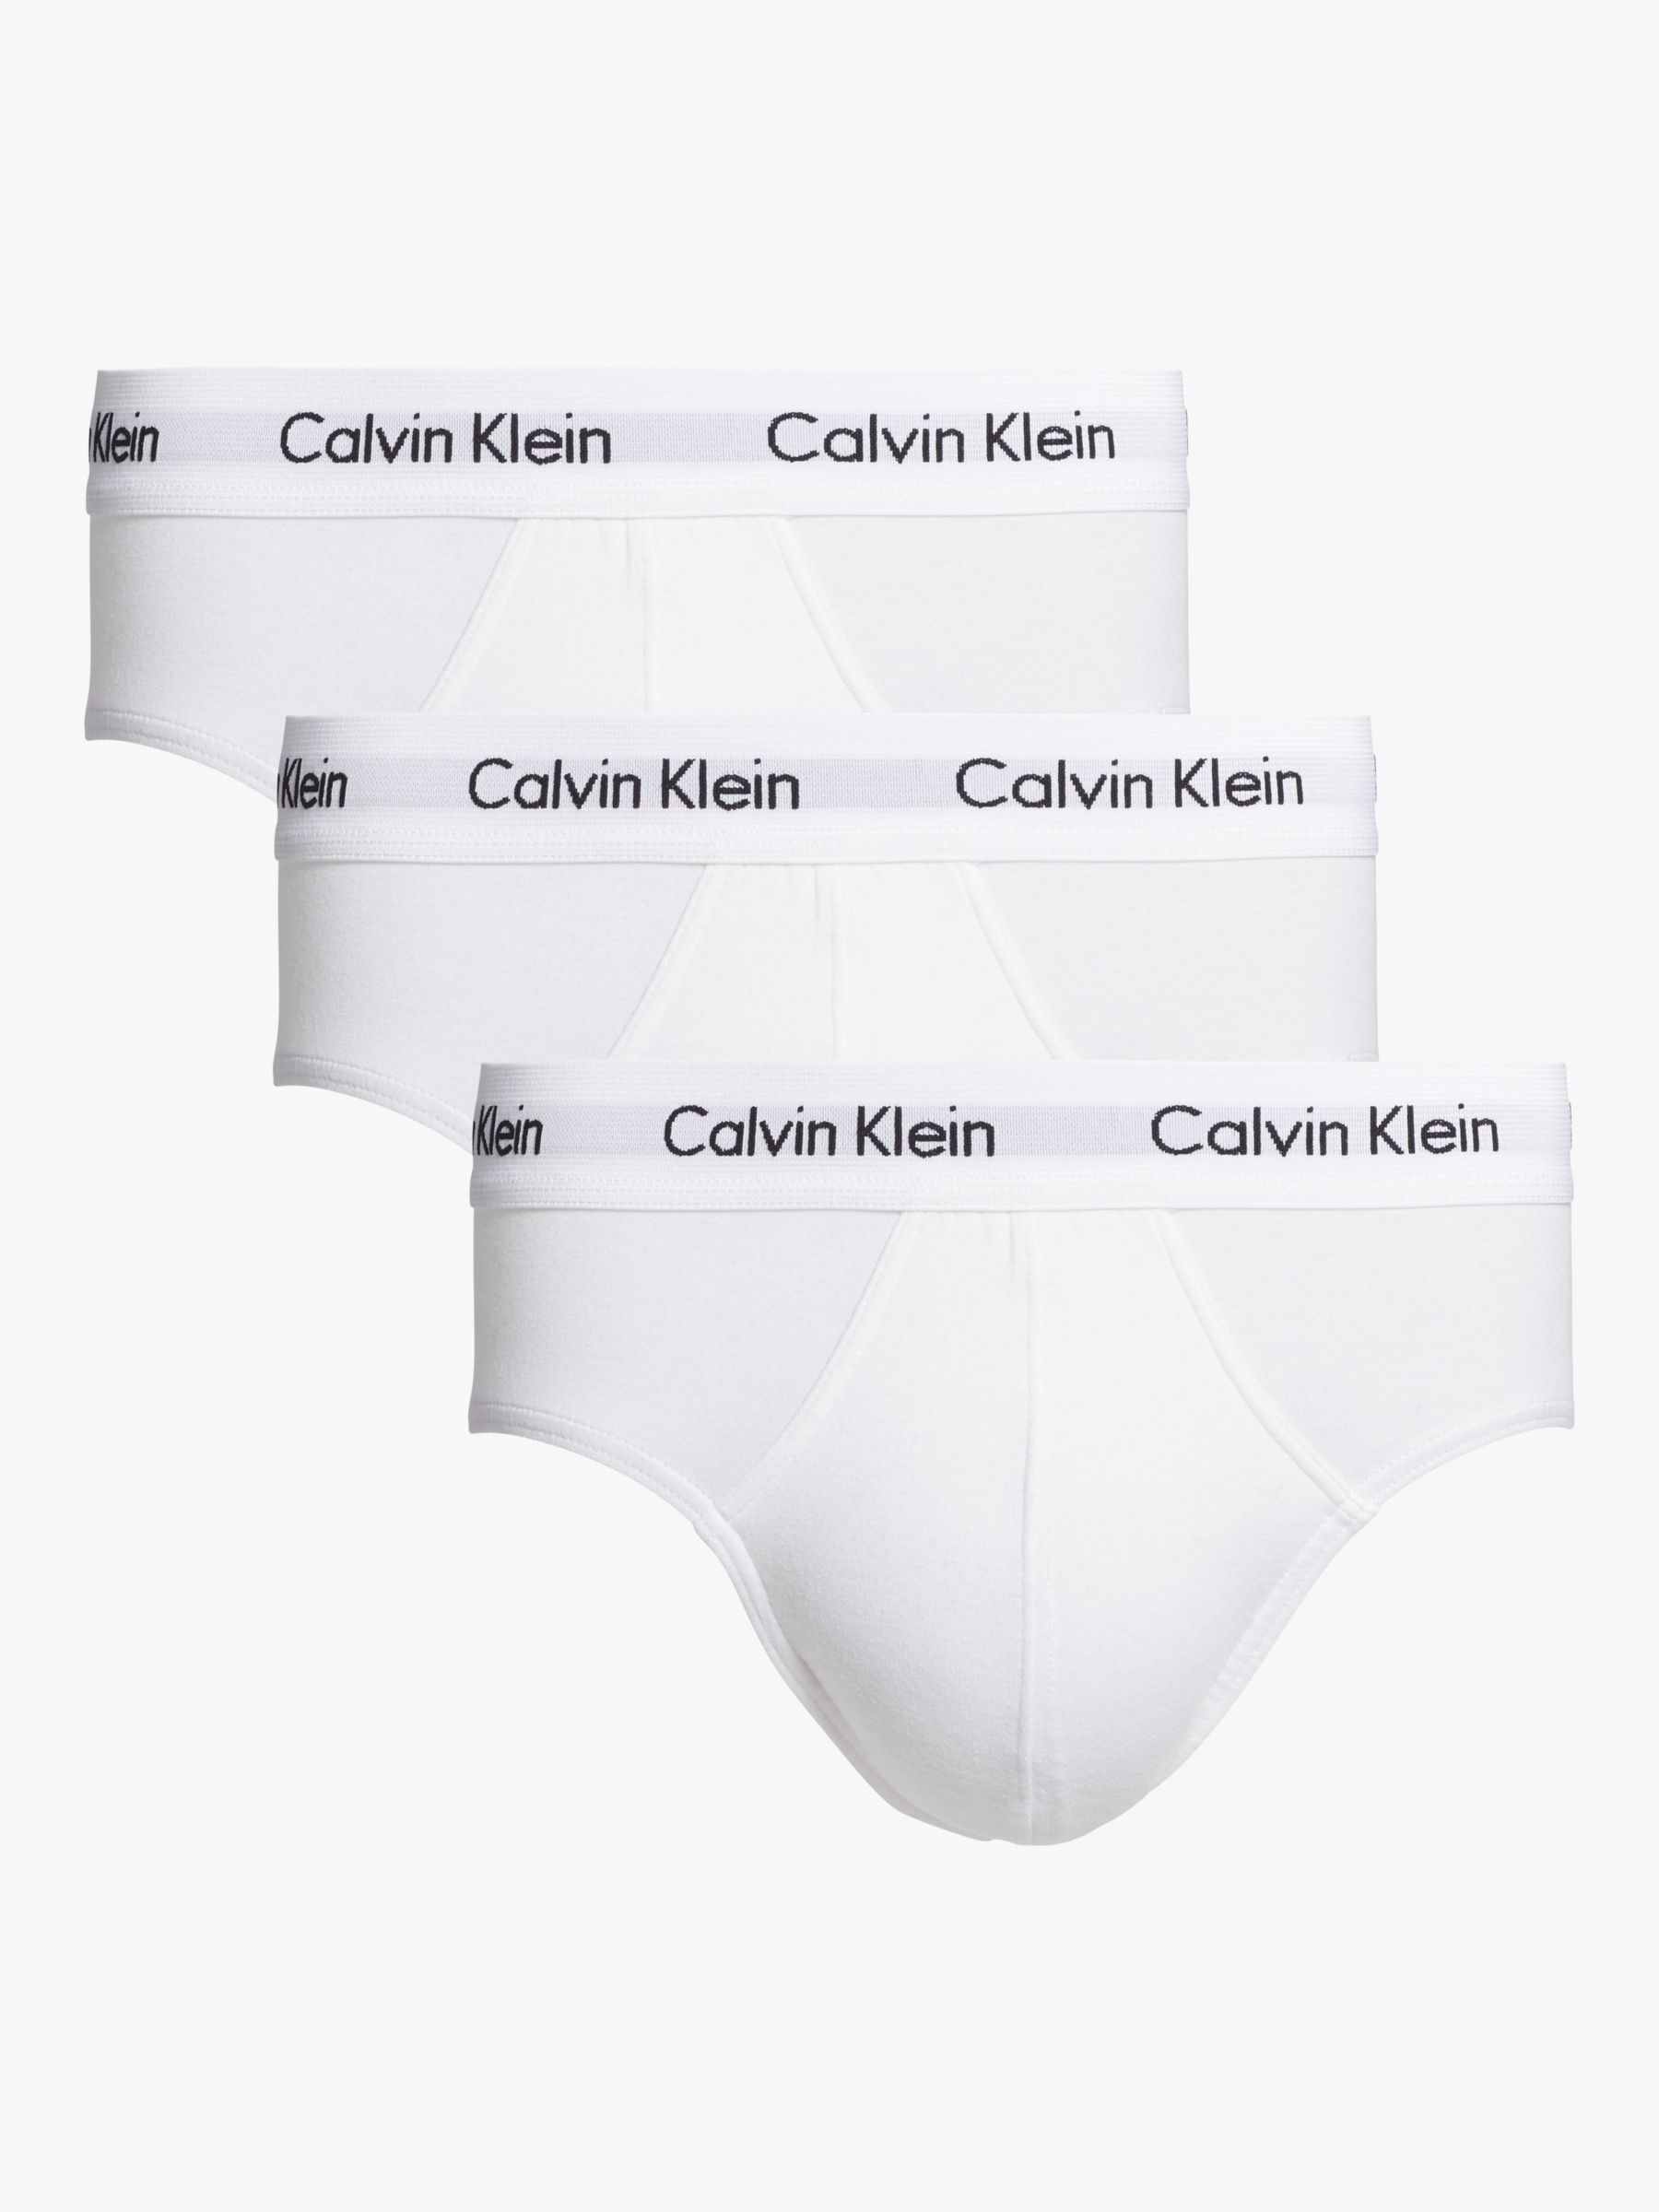 Men's White Calvin Klein Underwear | John Lewis & Partners